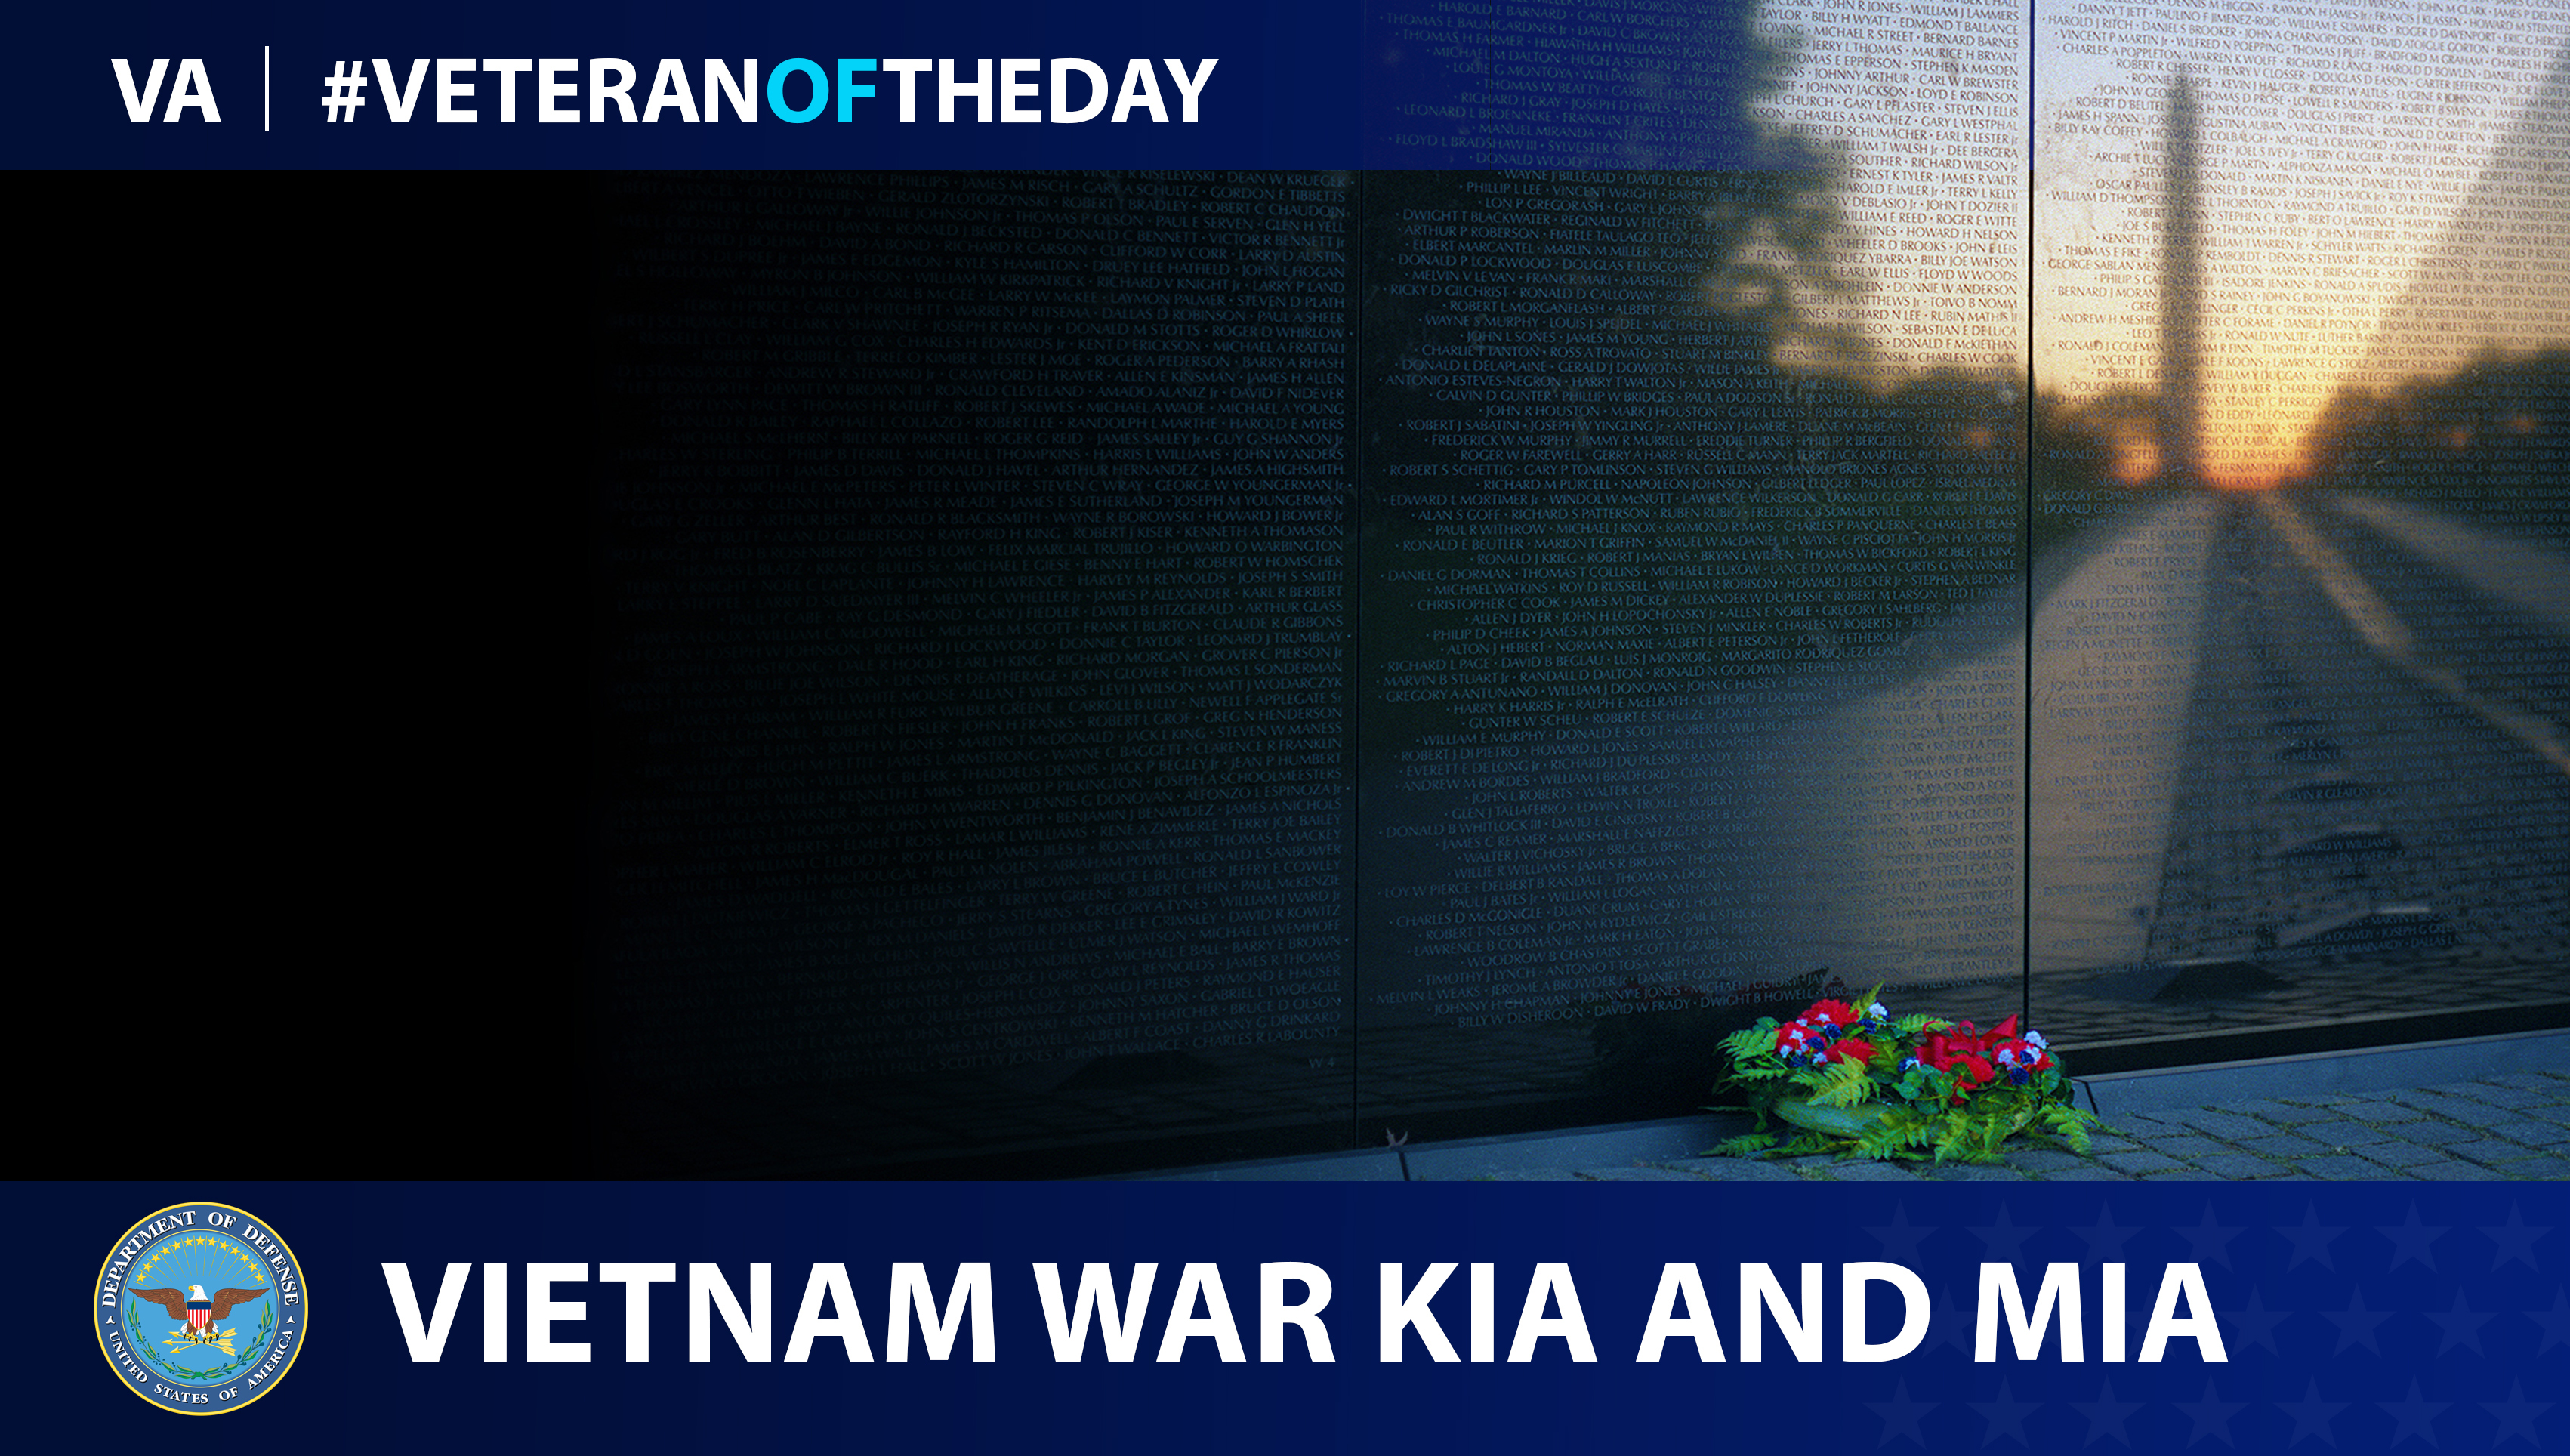 Vietnam War KIA and MIA are today's Veteran of the Day.